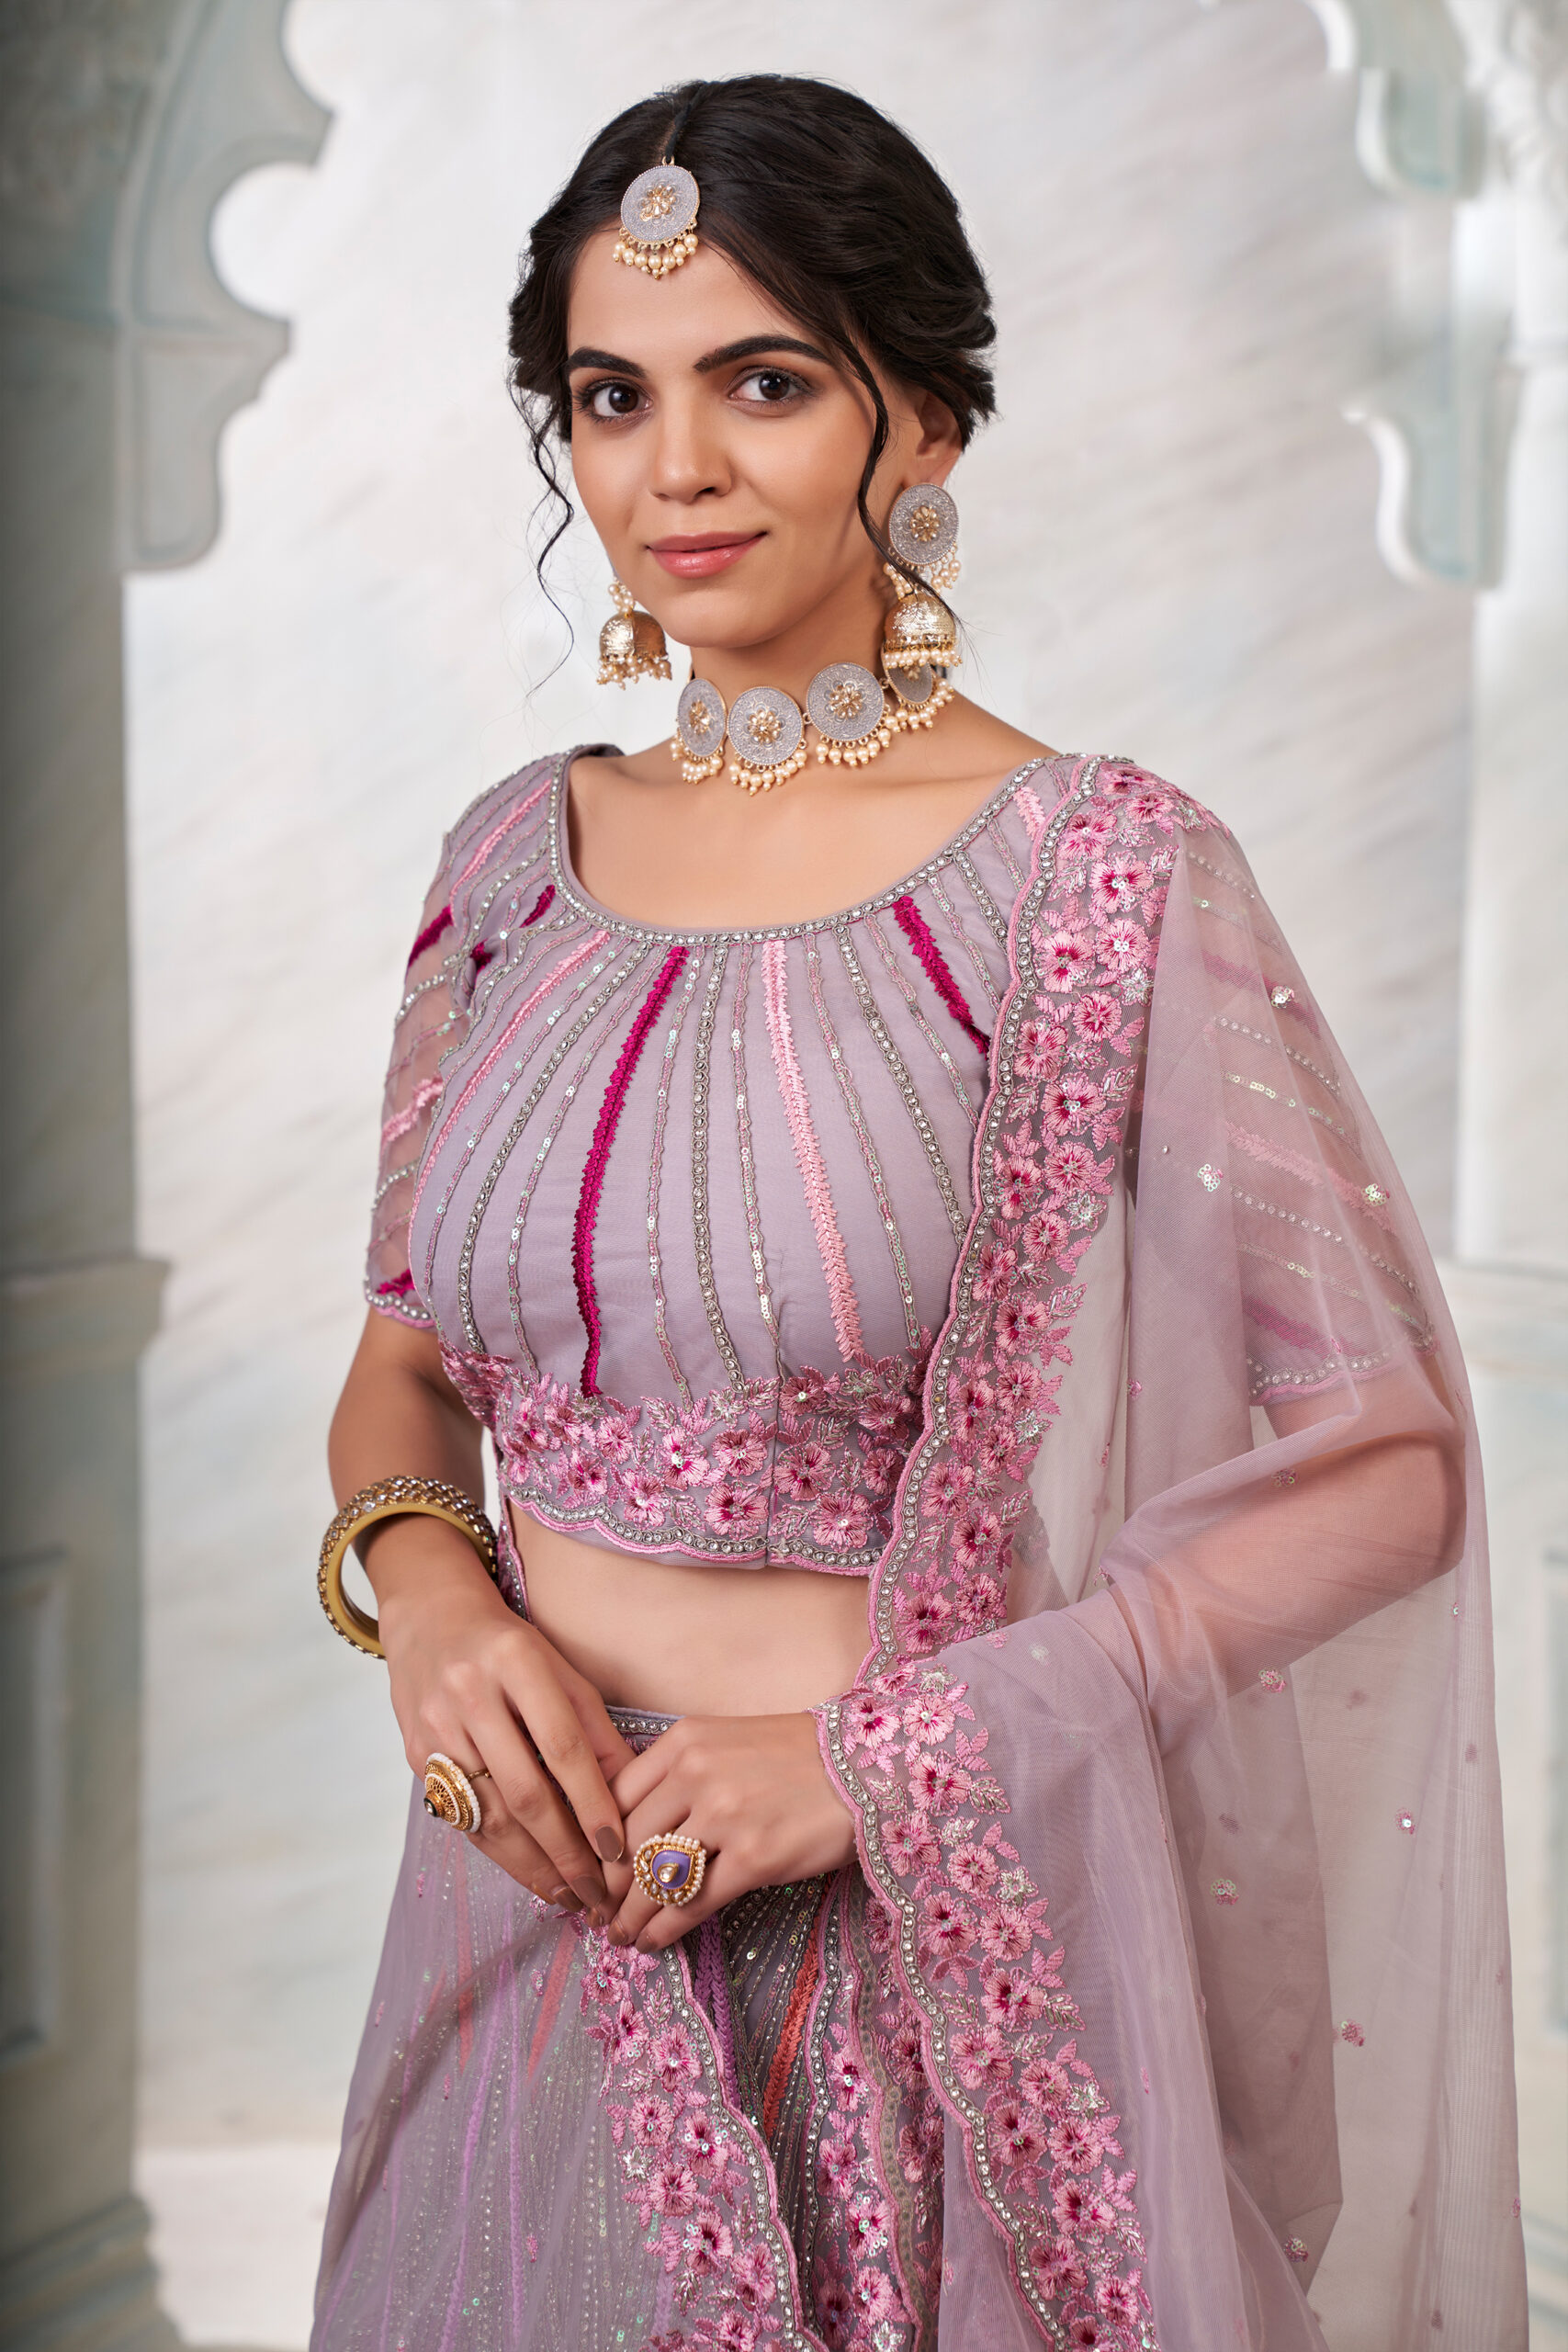 how to style jewellery with light pink bridal lehenga - jewellery ideas for  pink lehenga - YouTube